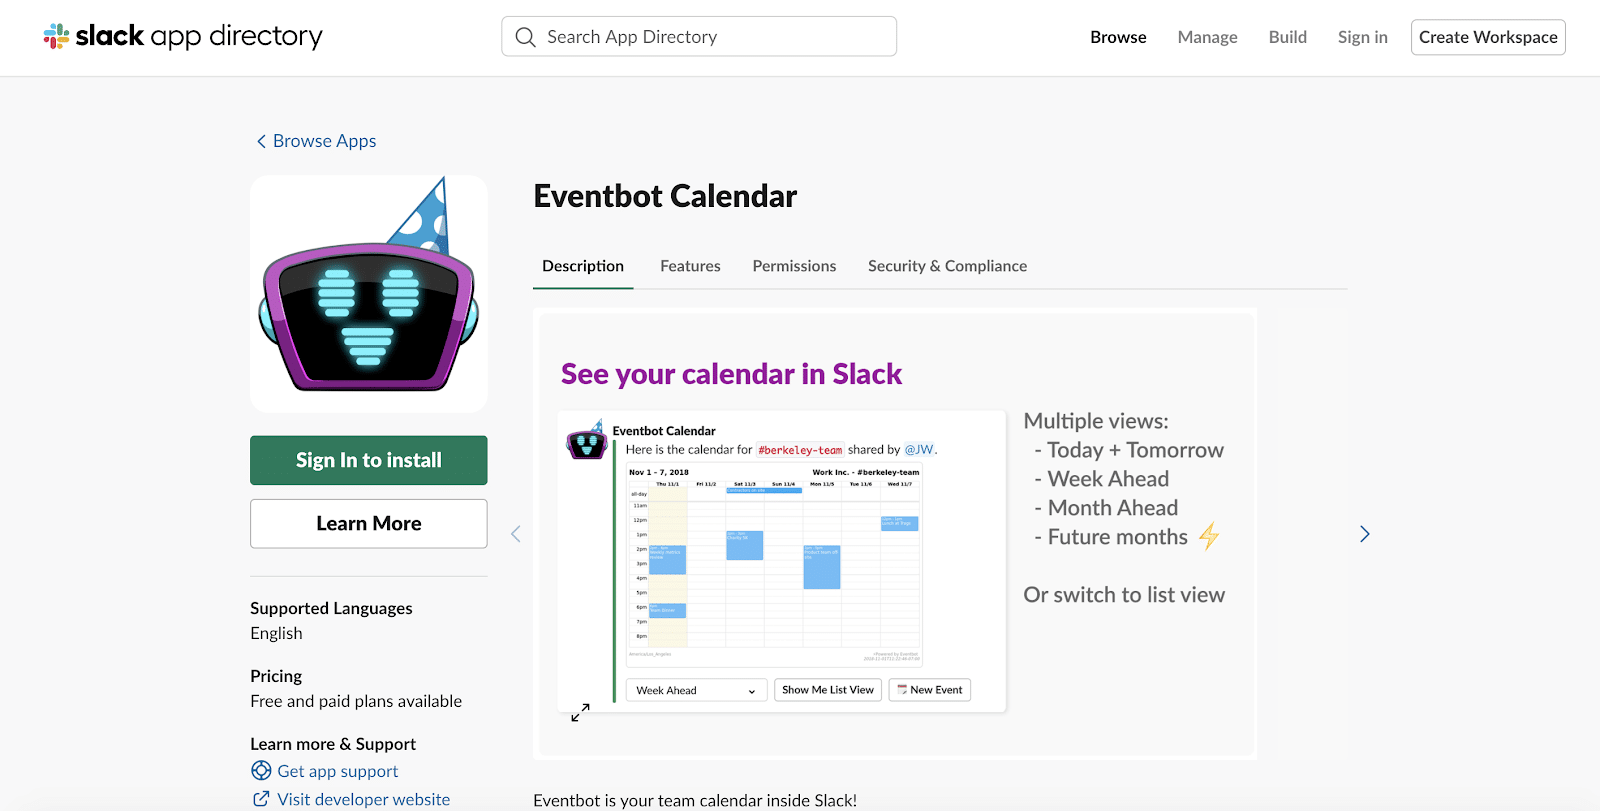 Eventbot Calendar App für Slack